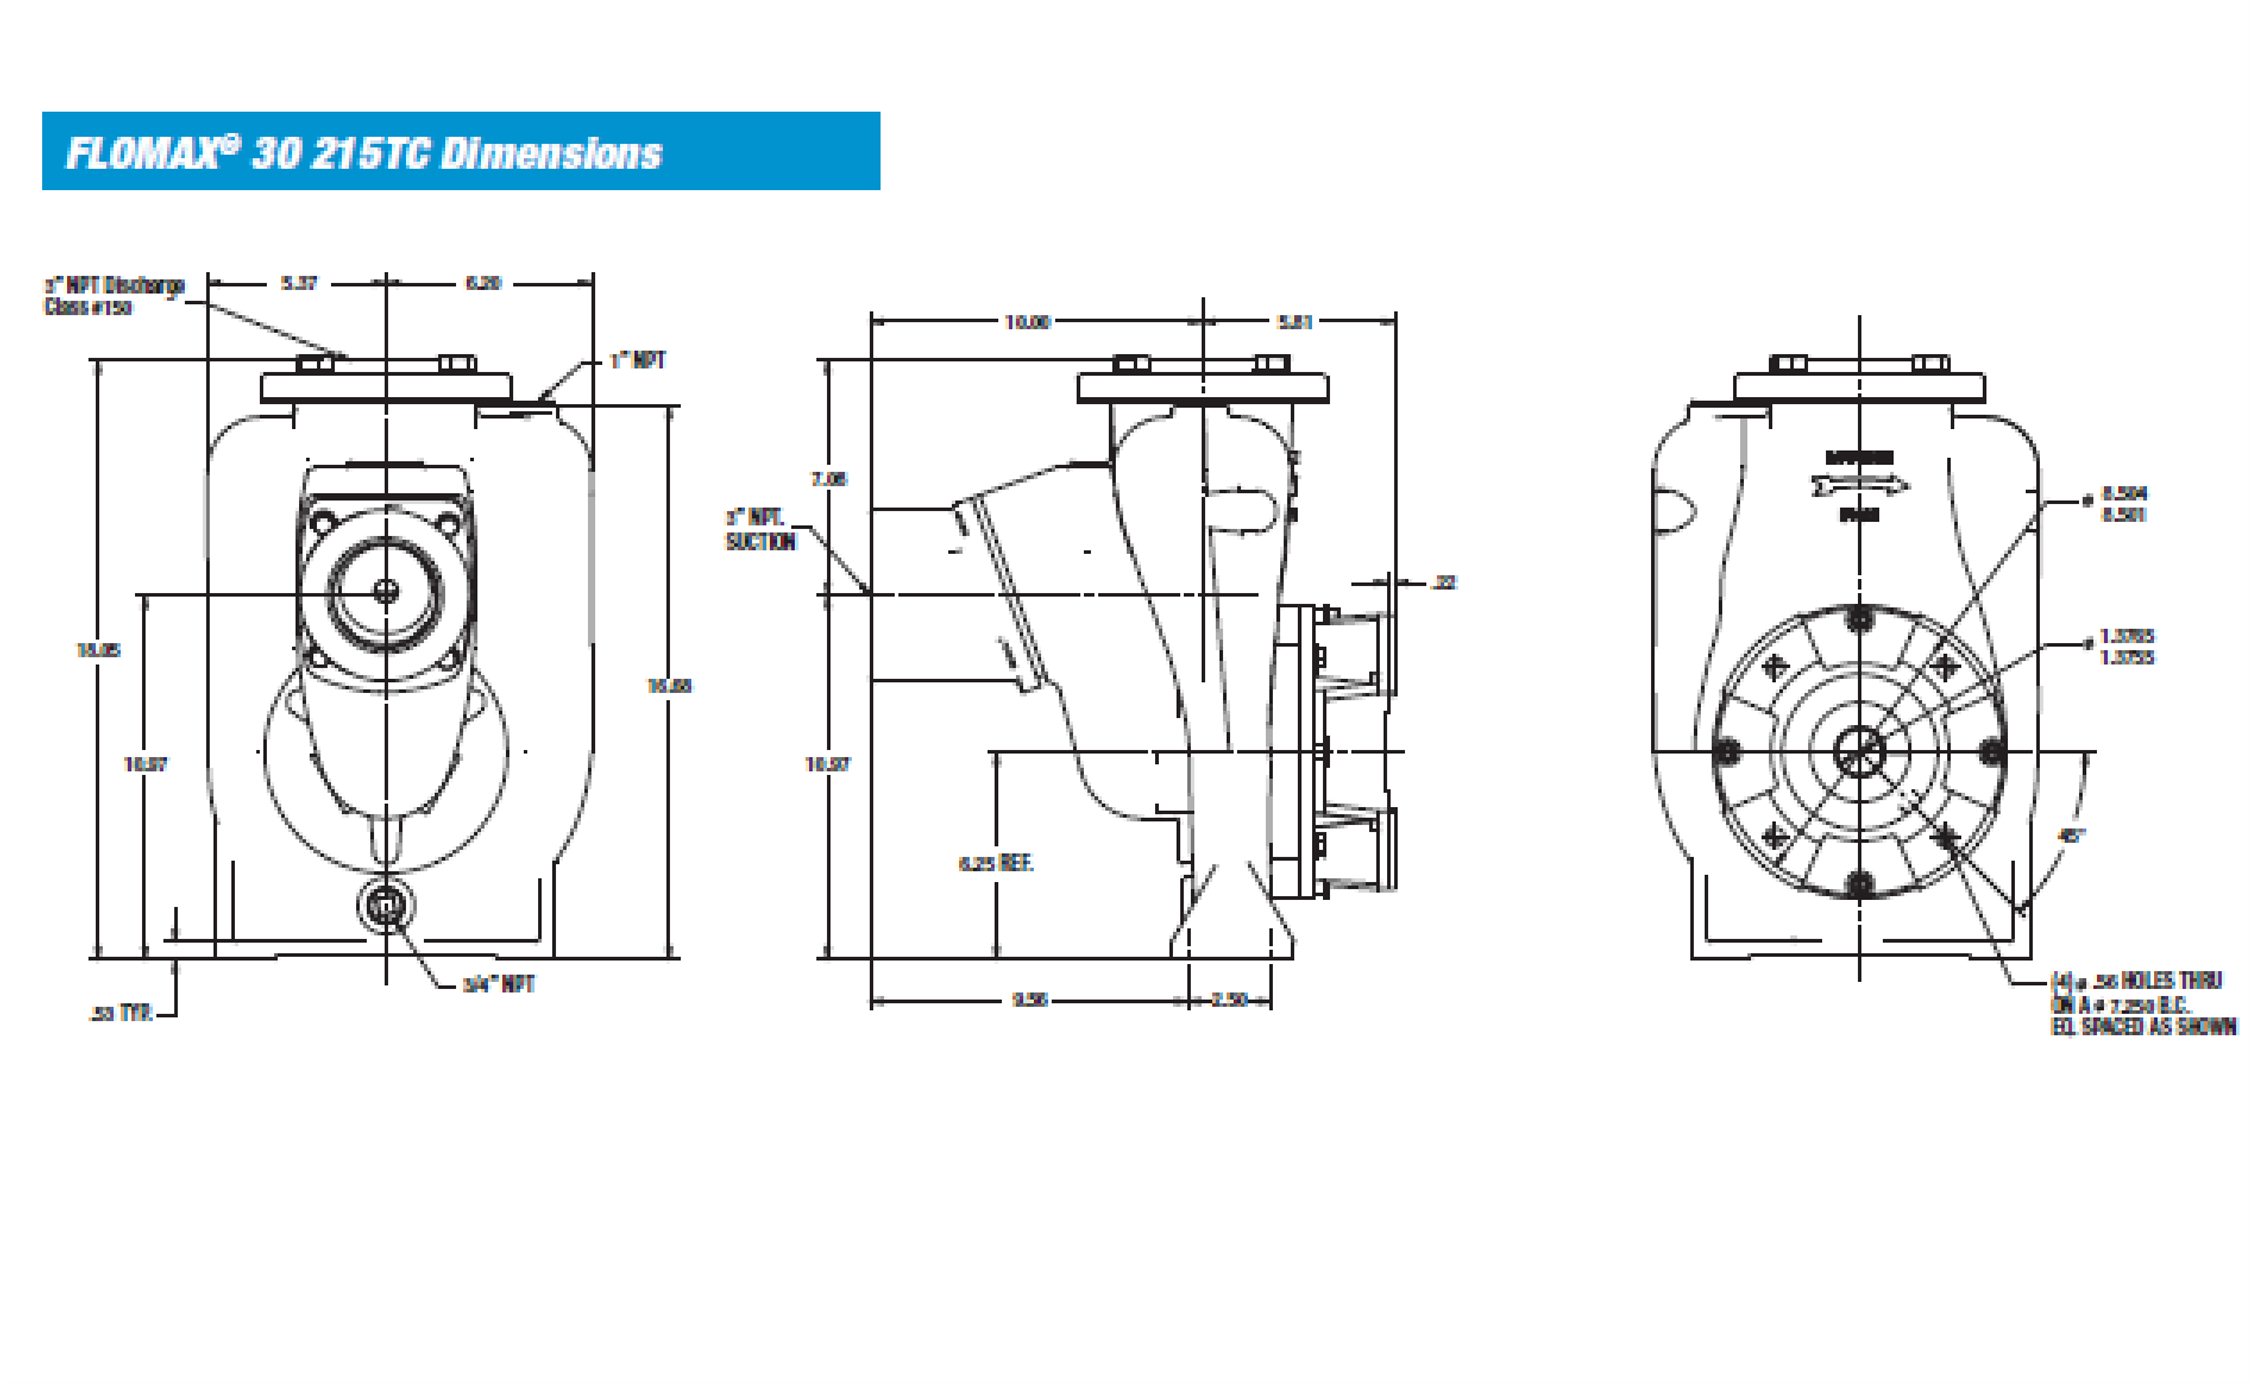 flomax-30-ss-industrial-vacuum-pump_drawing-2